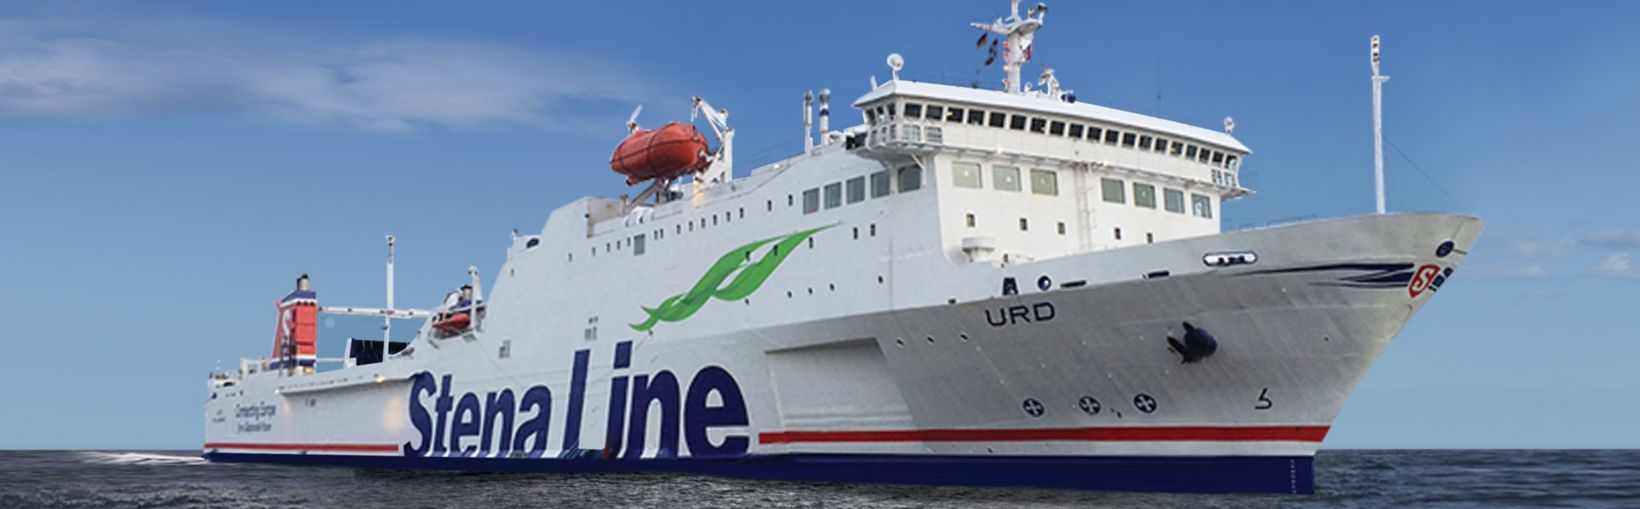 Urd ferry at sea